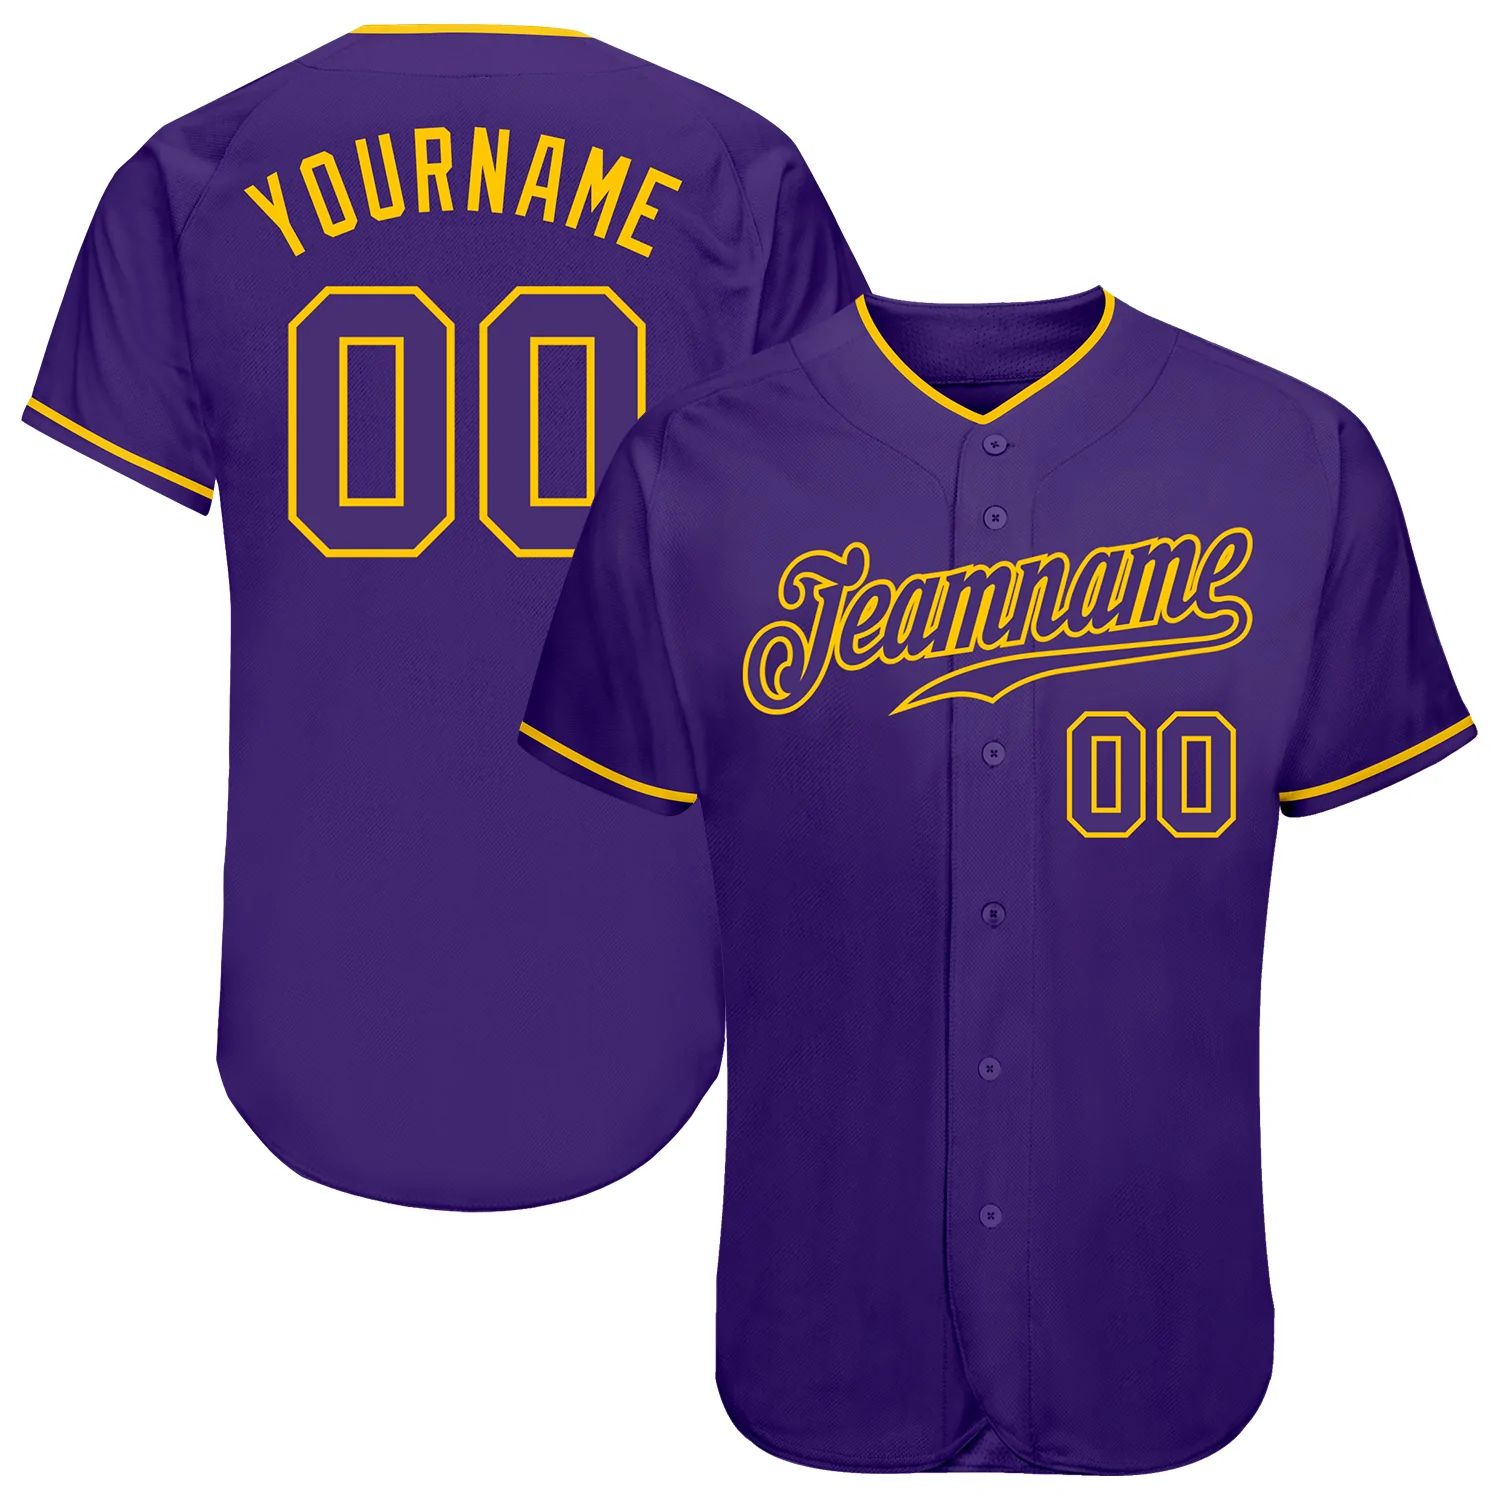 build-gold-purple-baseball-purple-jersey-authentic-purple0087-online-1.jpg